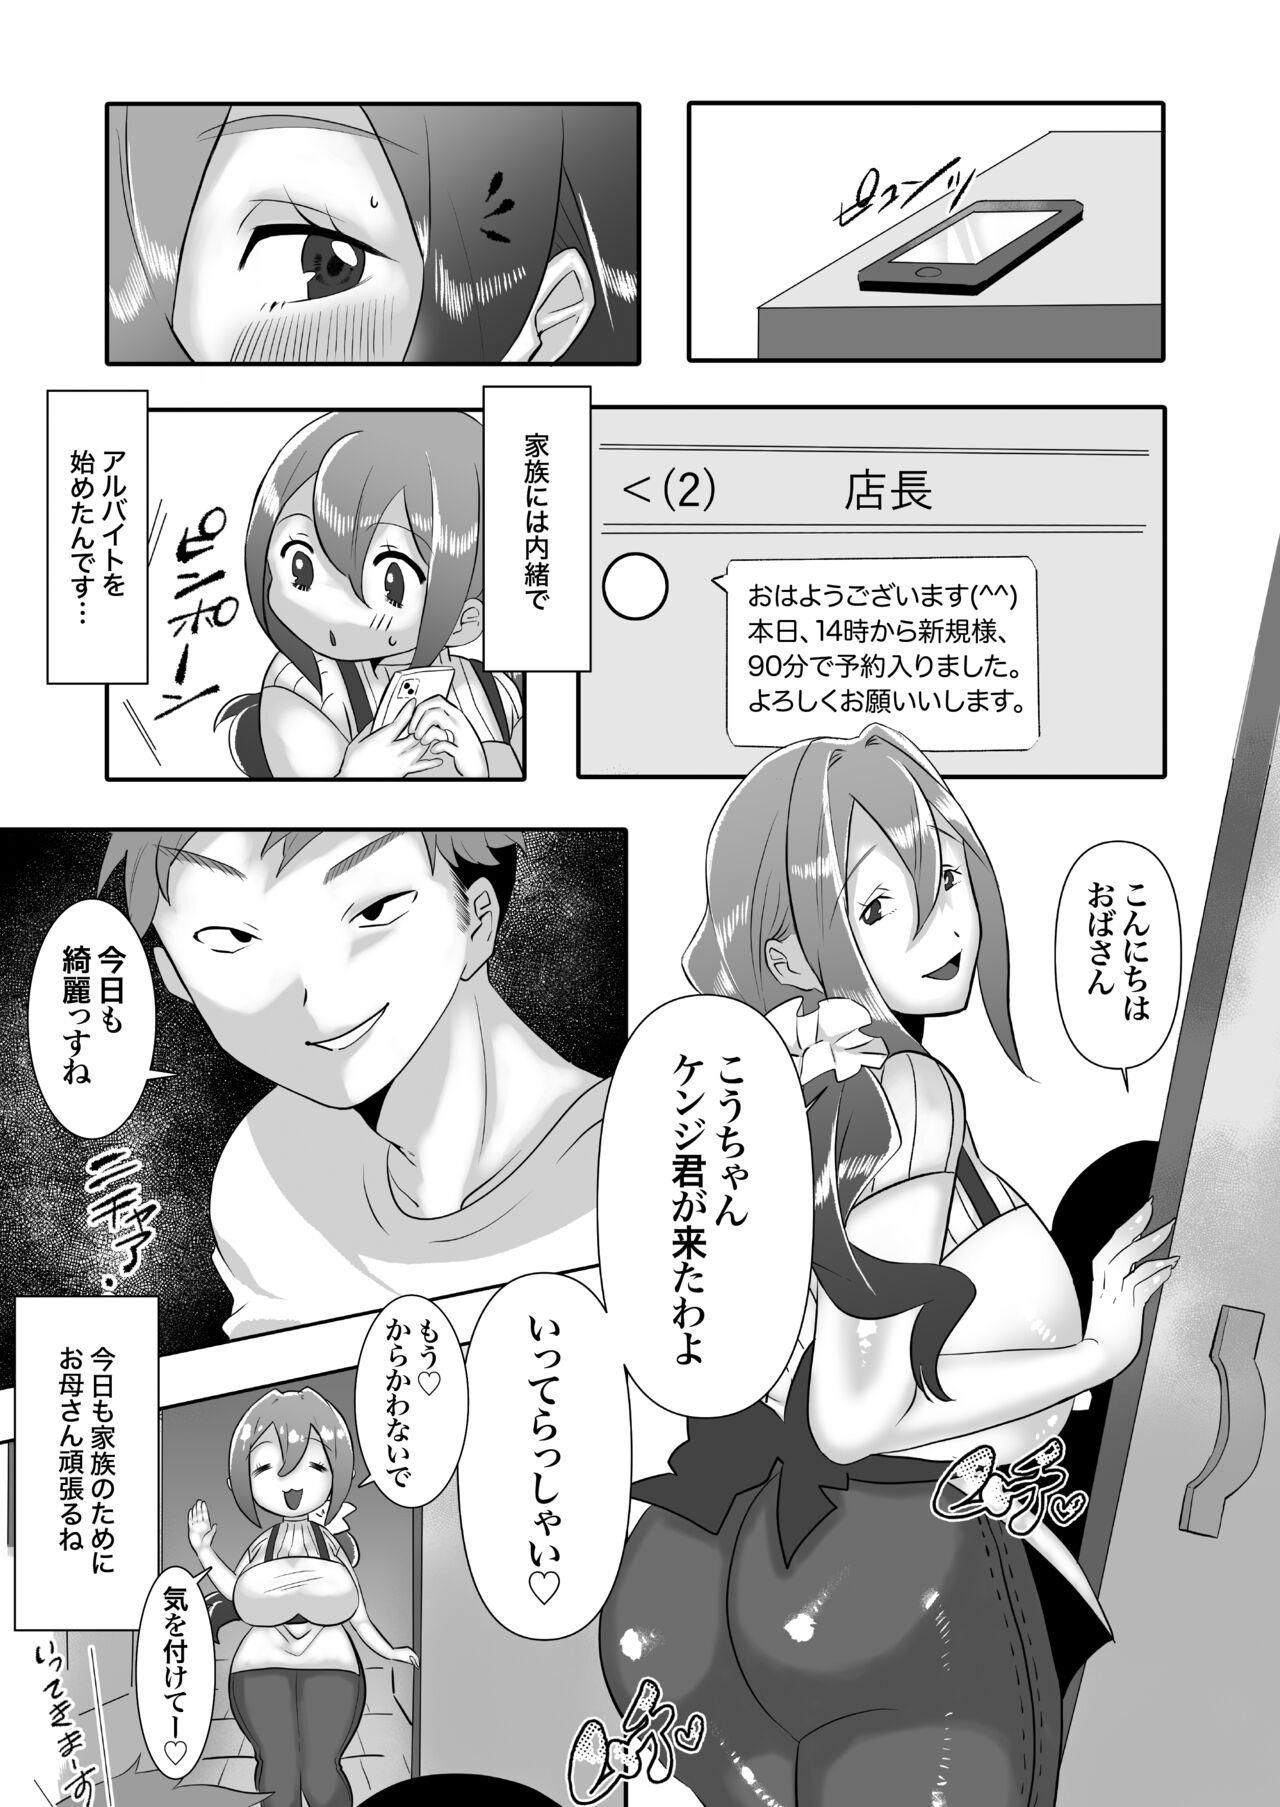 Paja DeliHeal Yondara Tomodachi no Kaa-chan ga Kita. - Original Boobs - Page 6